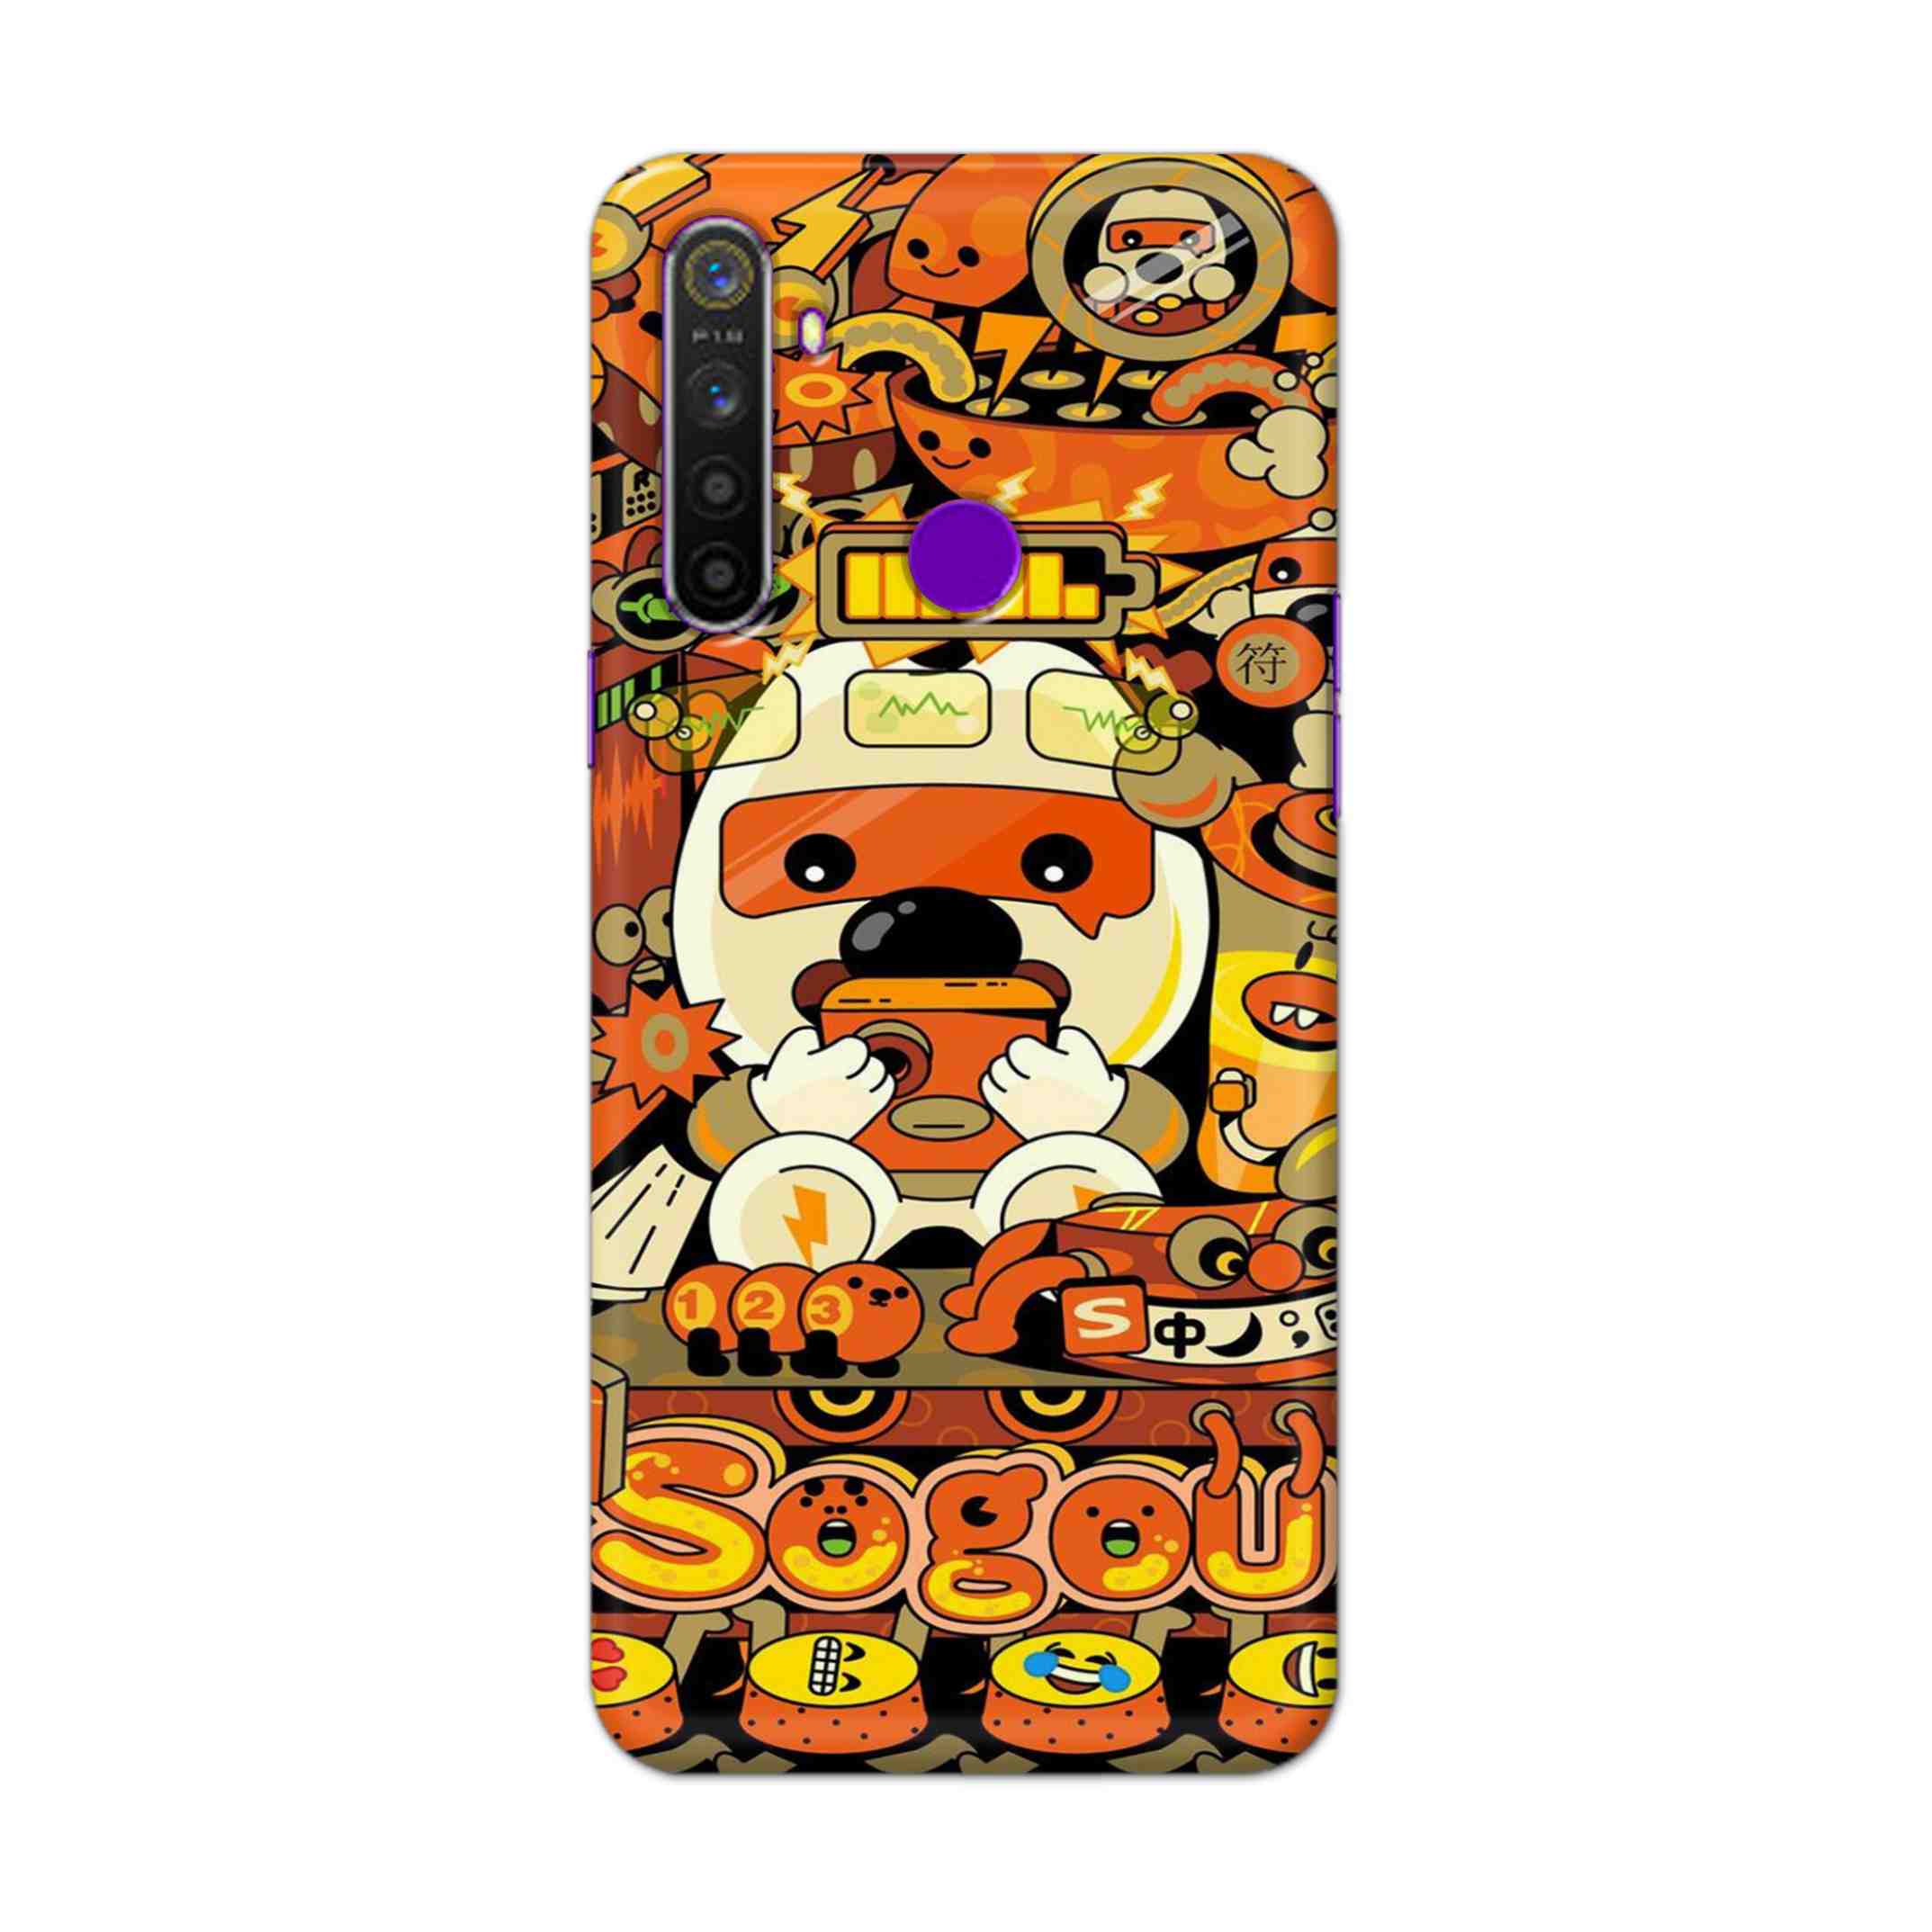 Buy Sogou Hard Back Mobile Phone Case Cover For Realme 5 Online